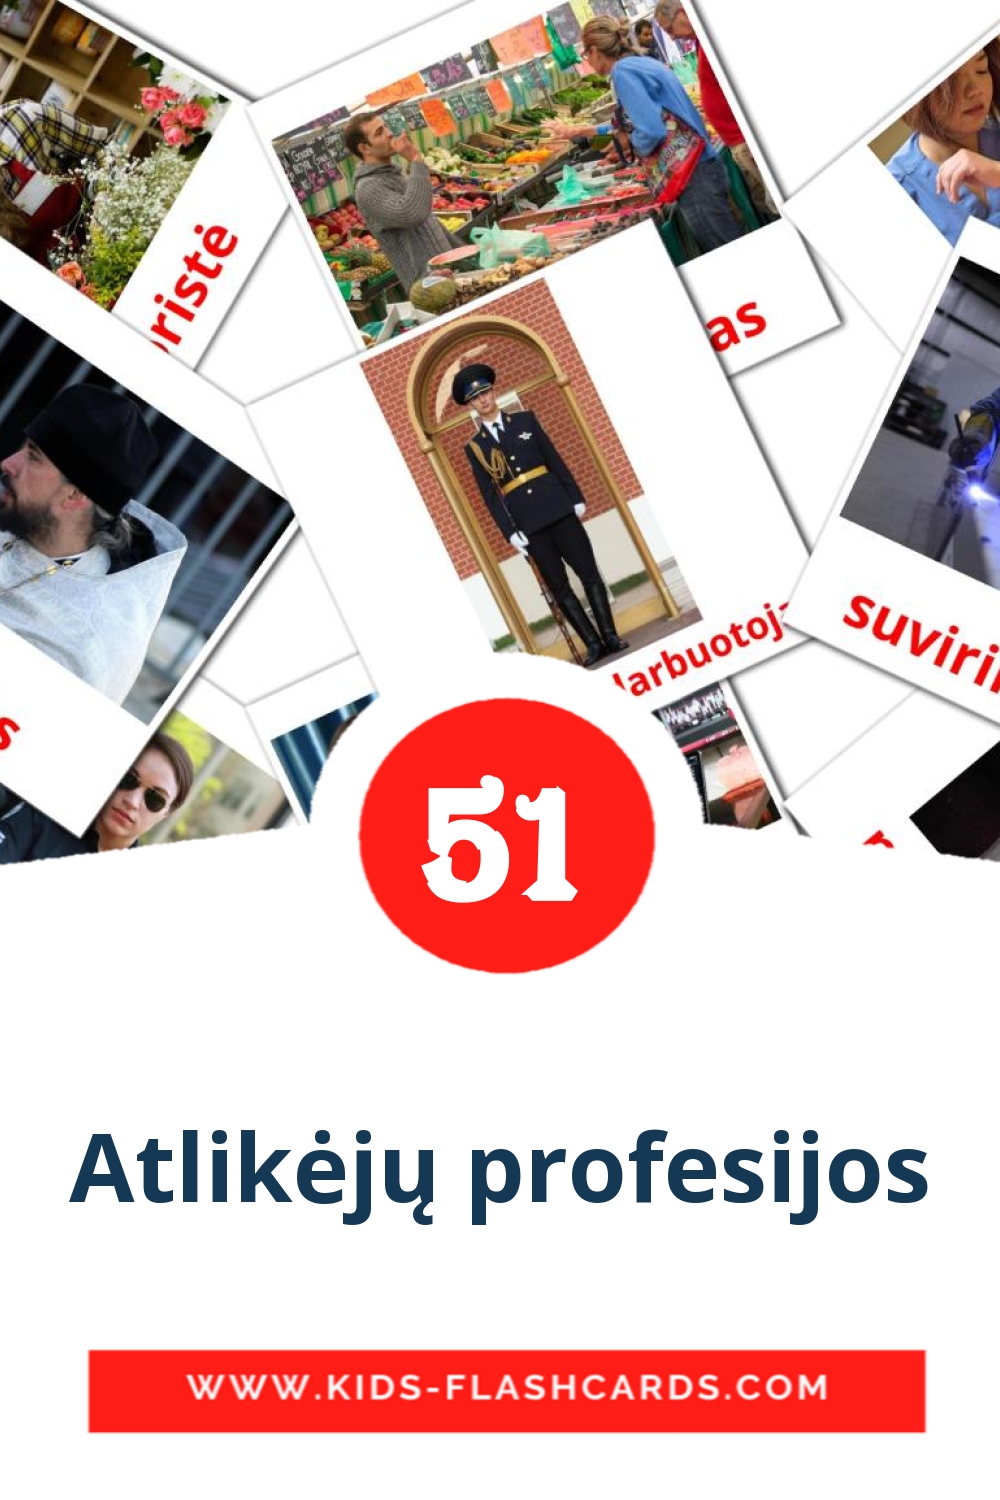 51 carte illustrate di Atlikėjų profesijos per la scuola materna in lituano